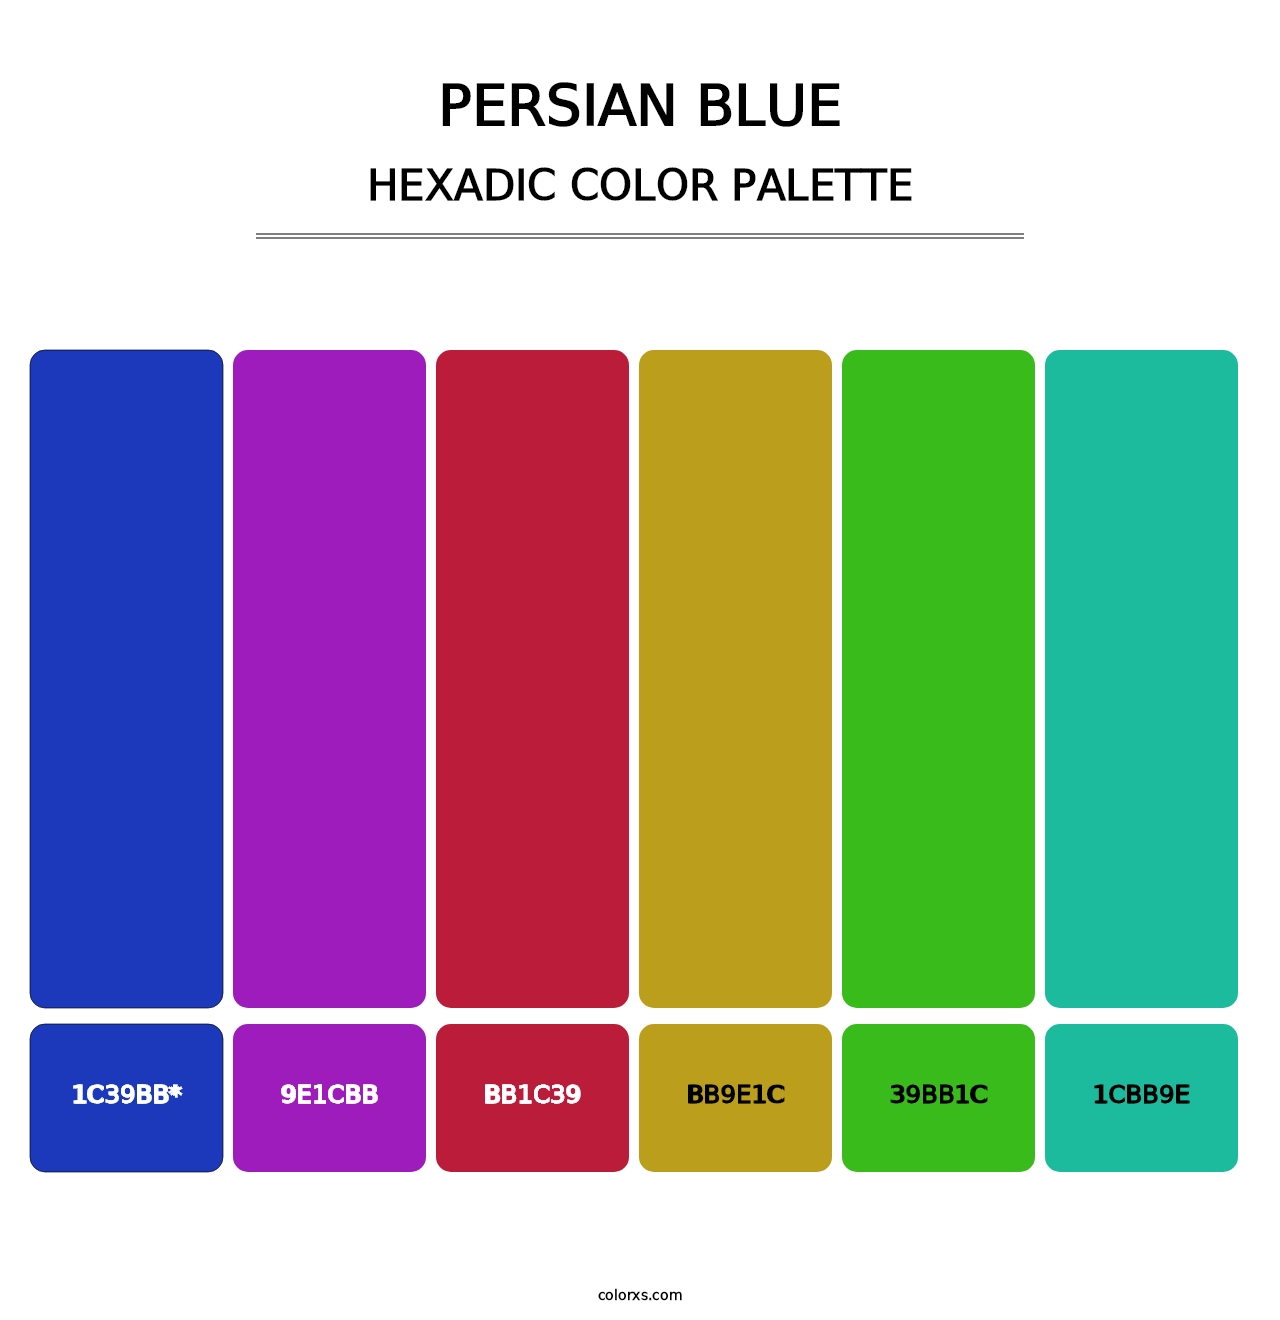 Persian Blue - Hexadic Color Palette